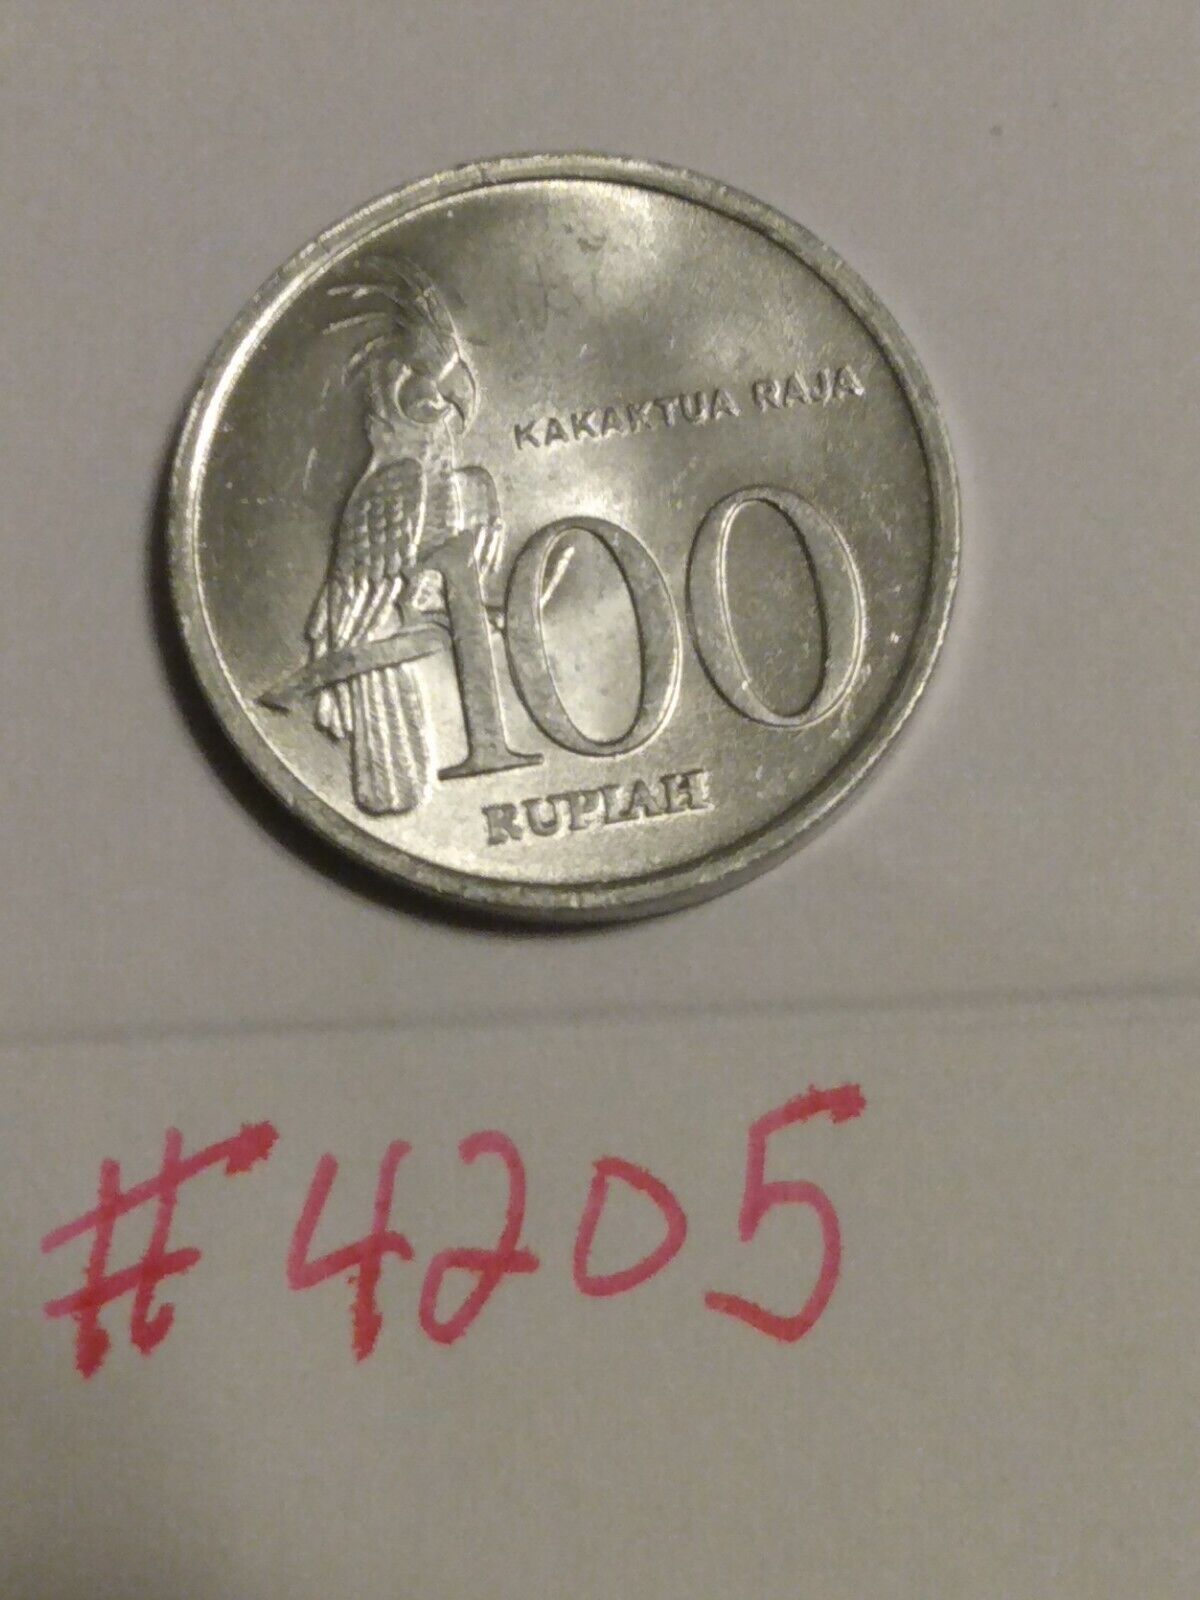 🇮🇩🇮🇩 1999 Indonesia 100 Rupiahs Coin 🇮🇩